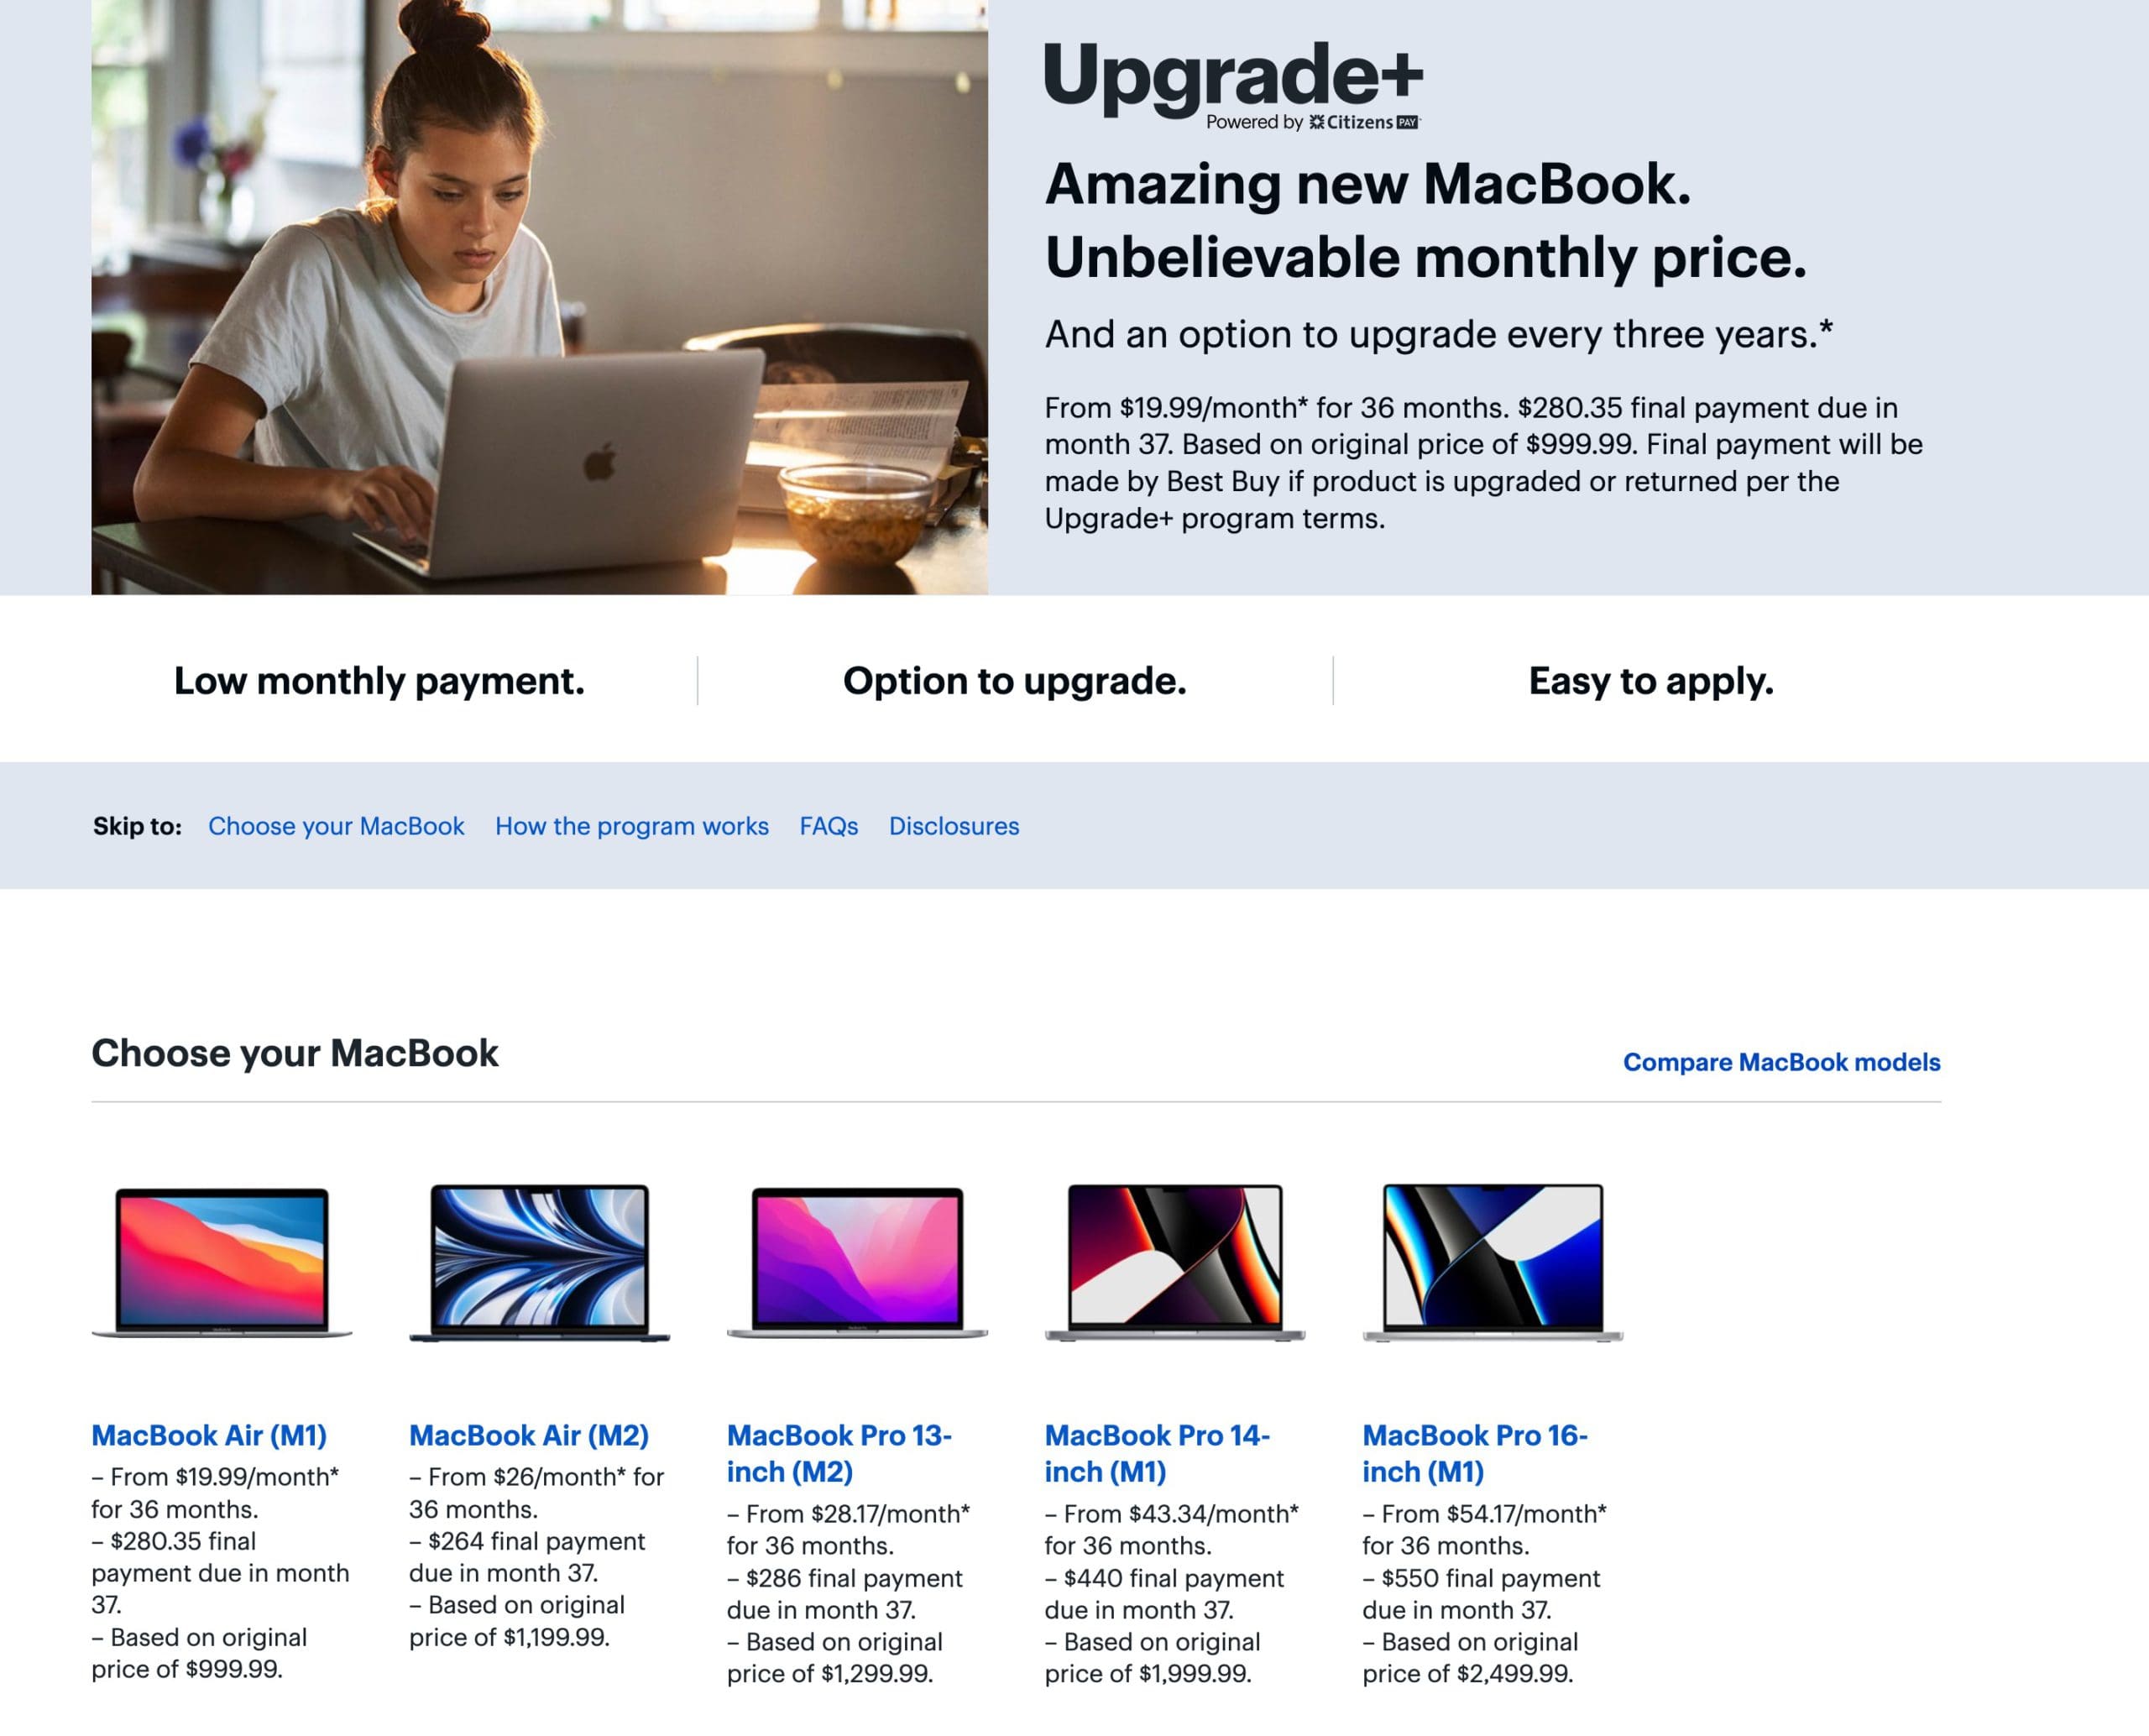 How to Get a New MacBook With Best Buy's Upgrade+ Program - 2